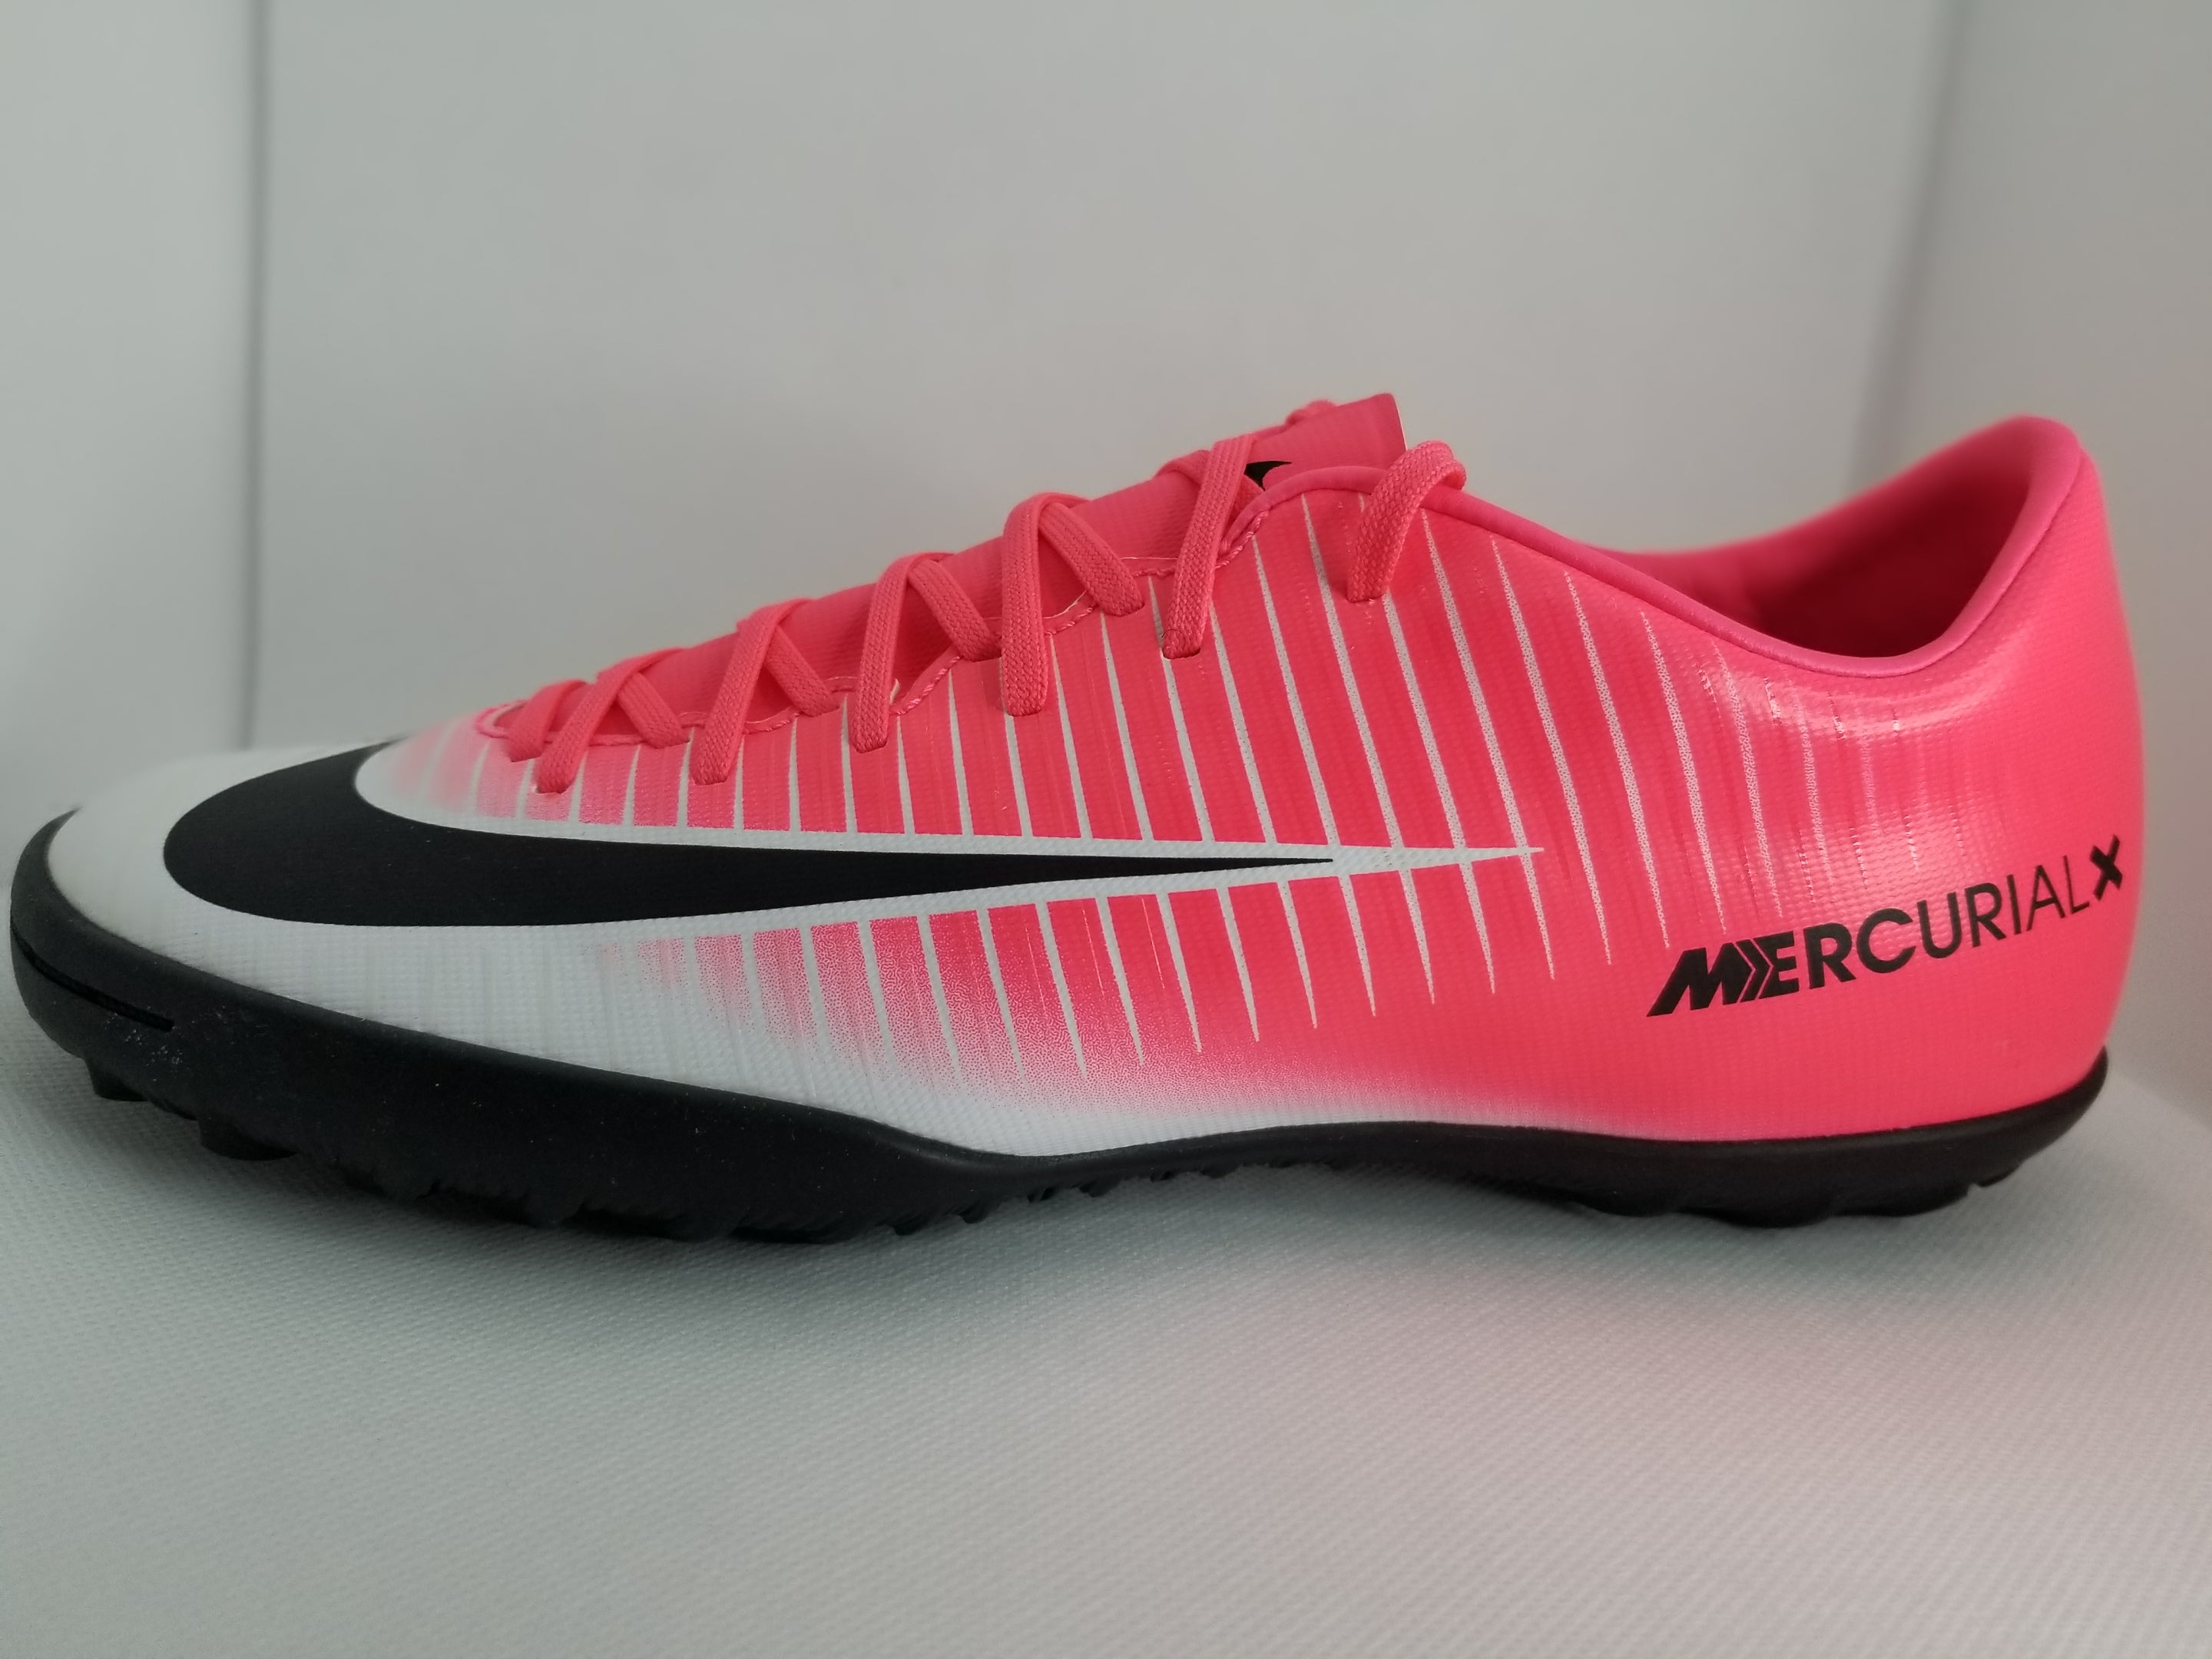 Nike MercurialX Victory VI TF – Boots